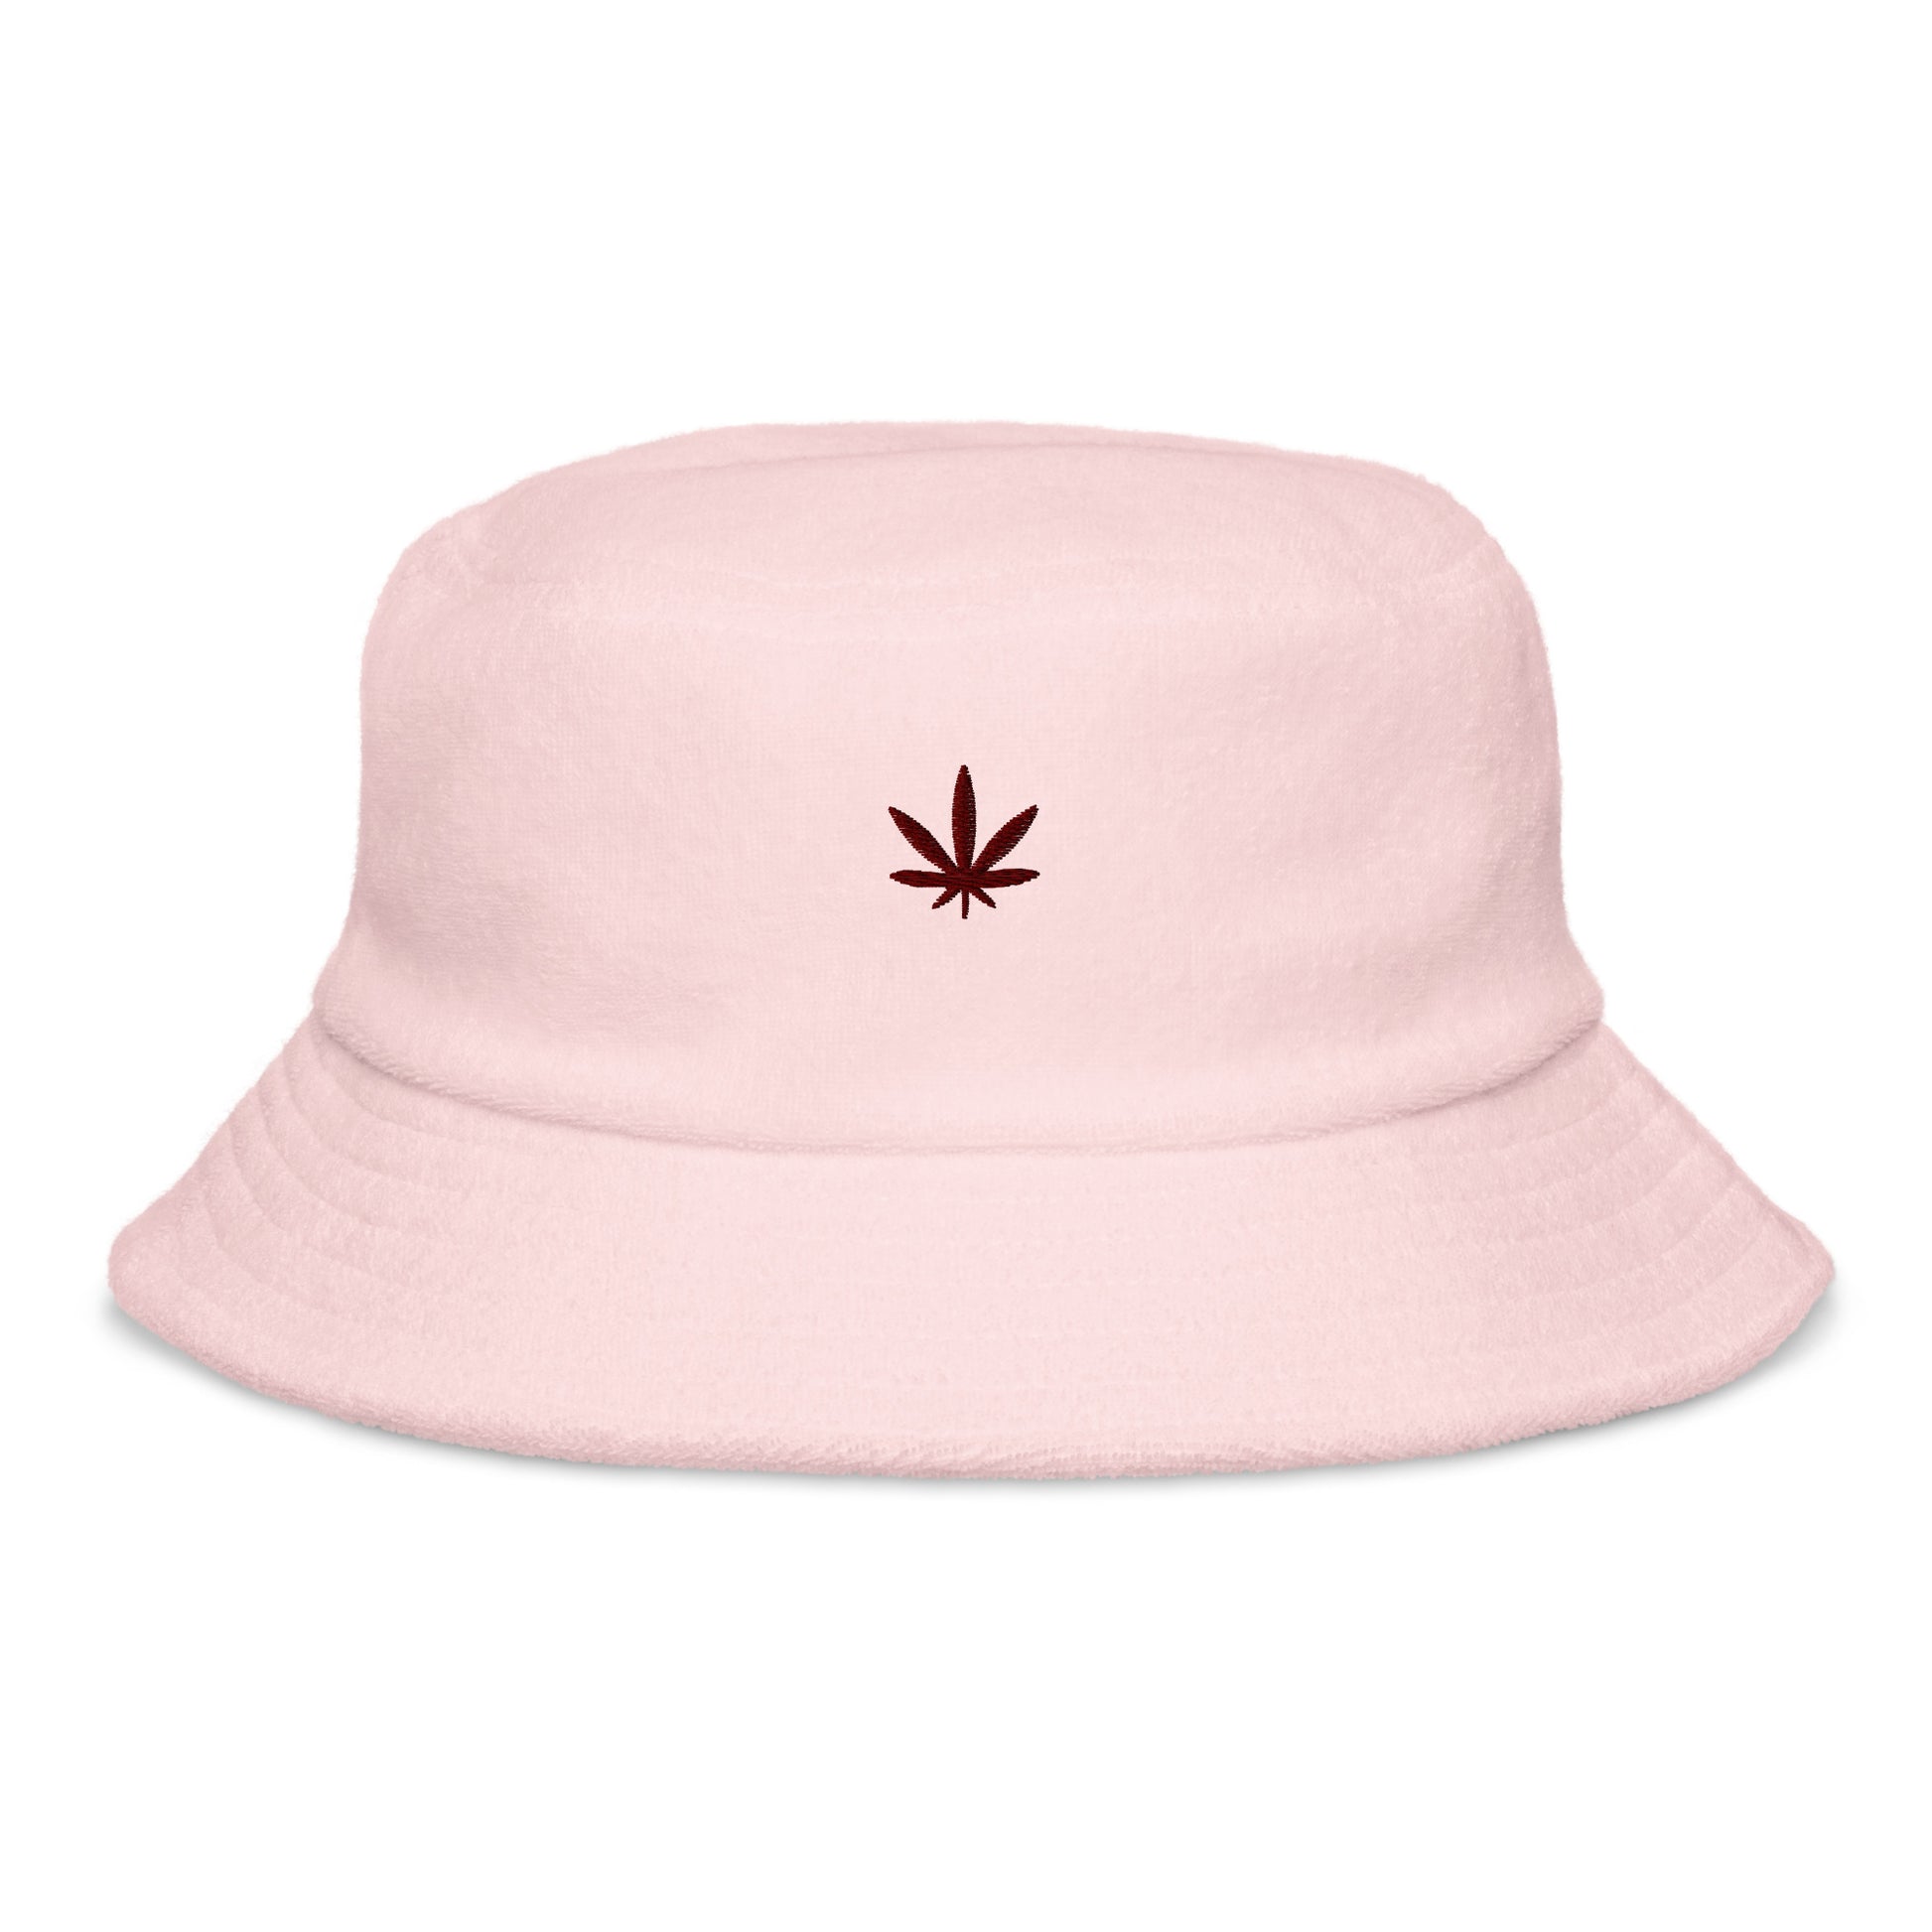 bucket gat organic pink hat weed stoner gift one size festival style fashion hat christnas gift